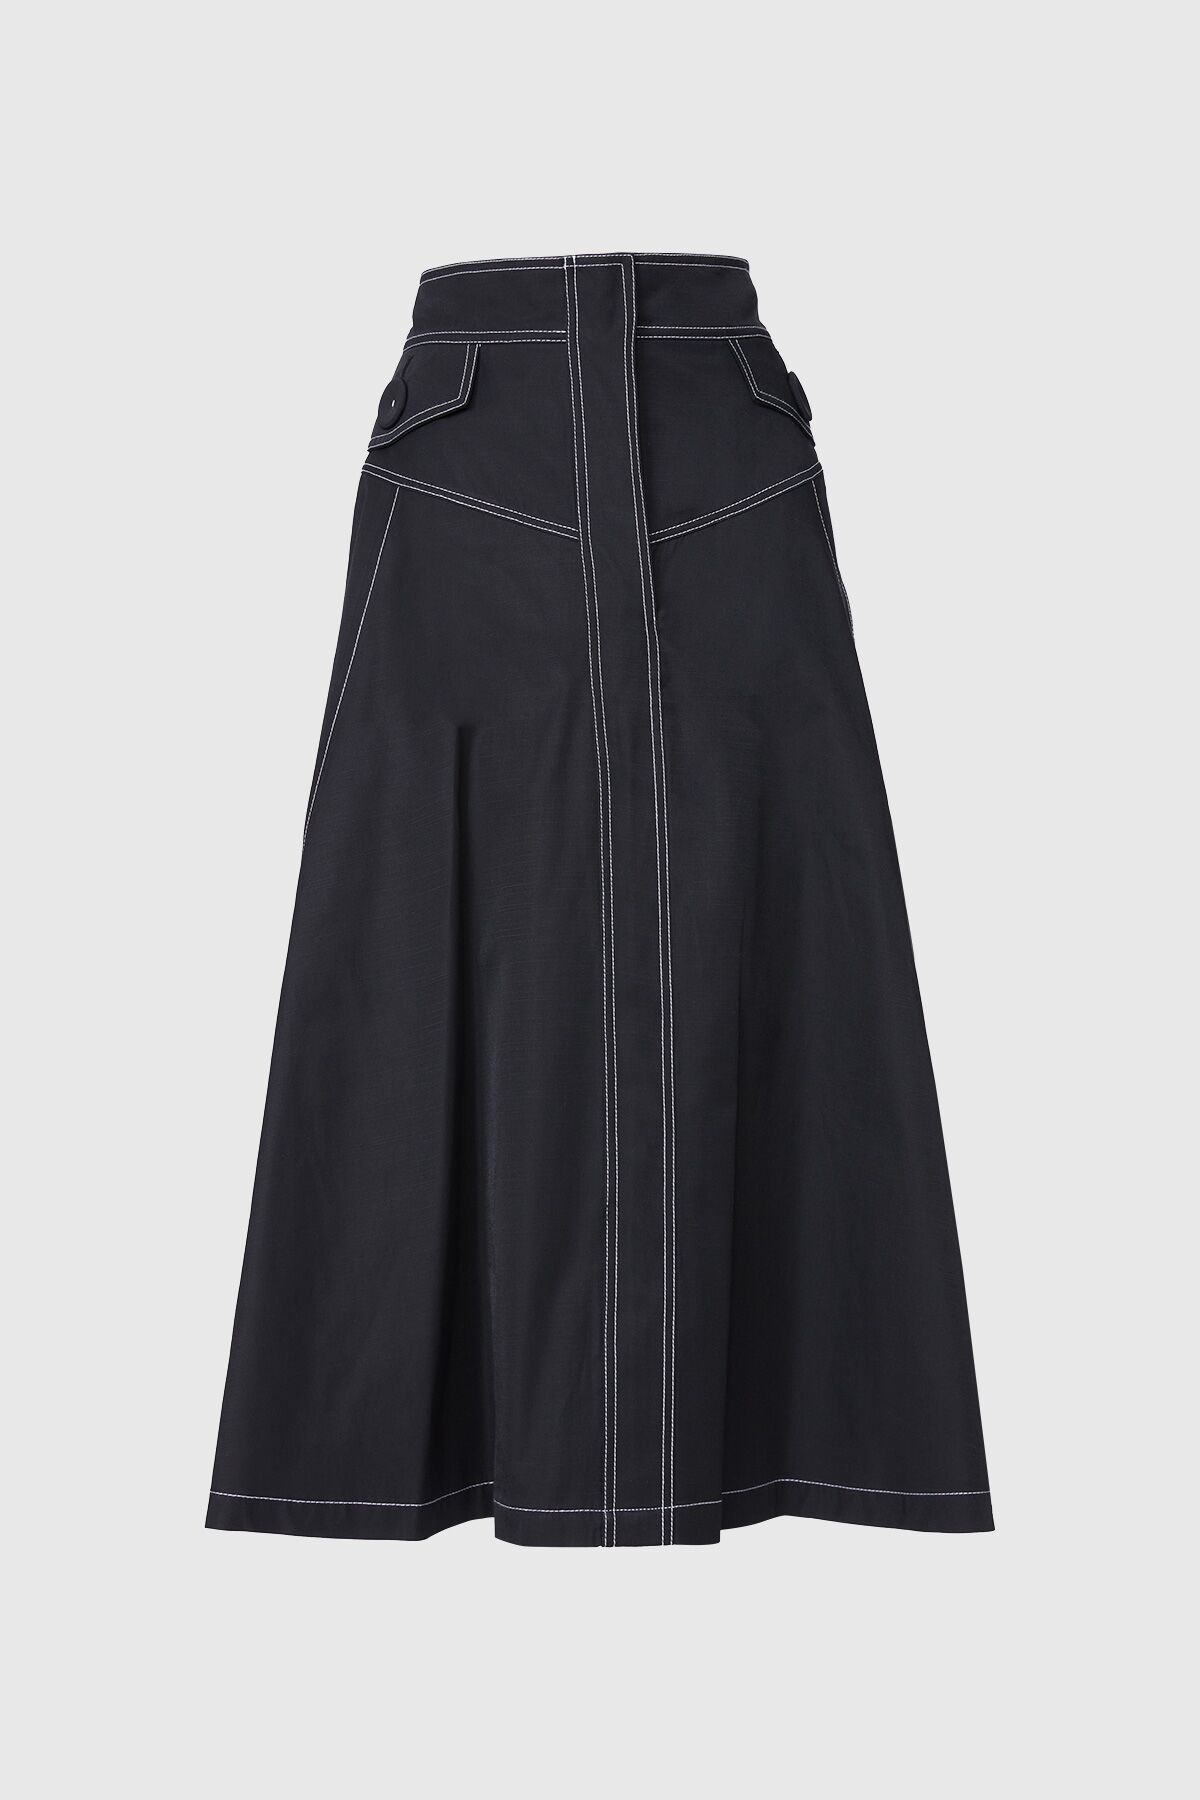  GIZIA - Contrast Stitch Detail High Waist Midi Length Black Skirt